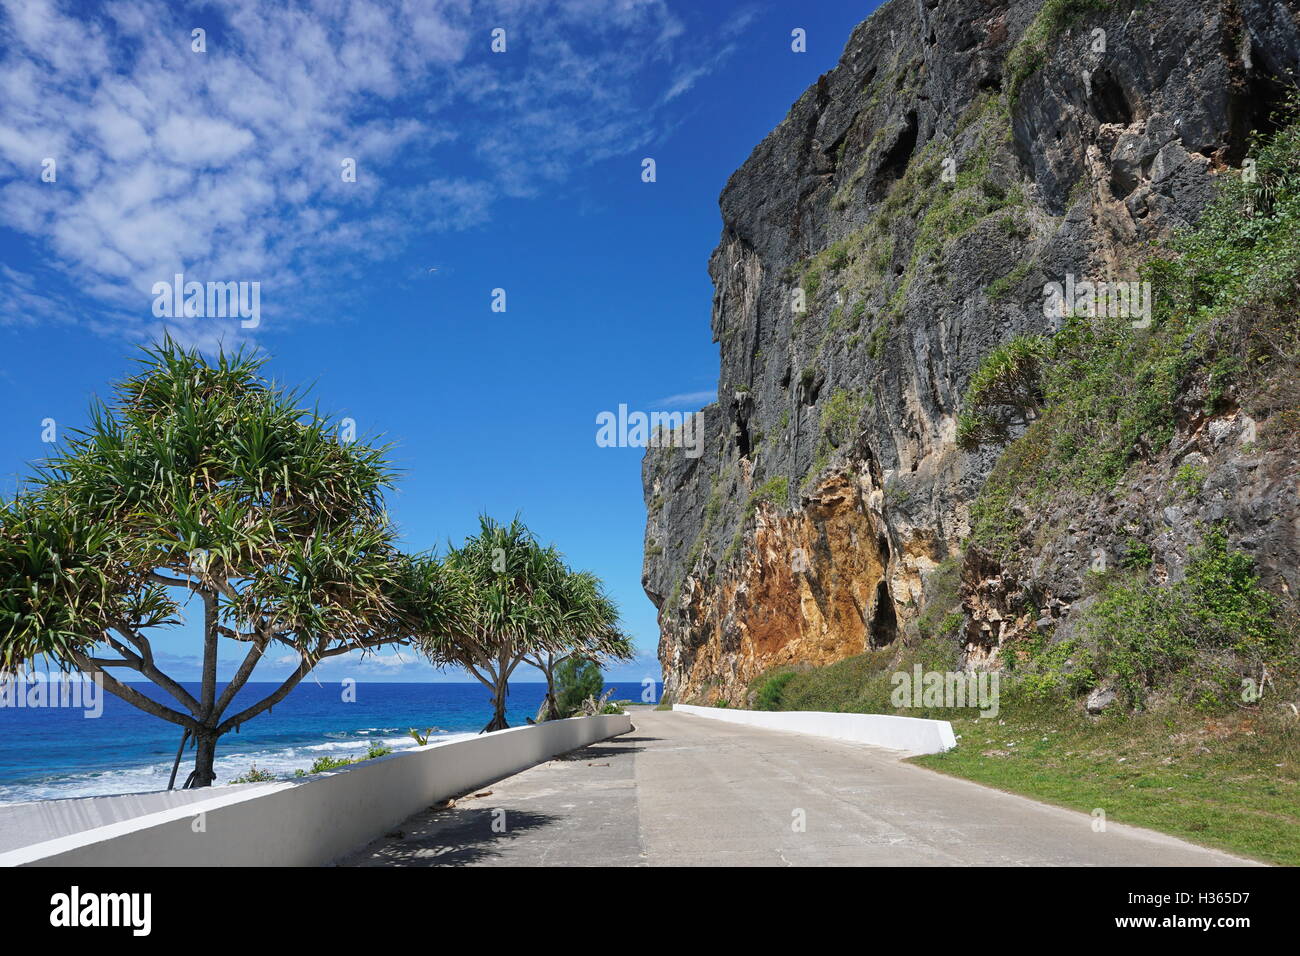 Eroded limestone cliff along the coastal road of Rurutu island, Pacific ocean, Austral archipelago, French Polynesia Stock Photo